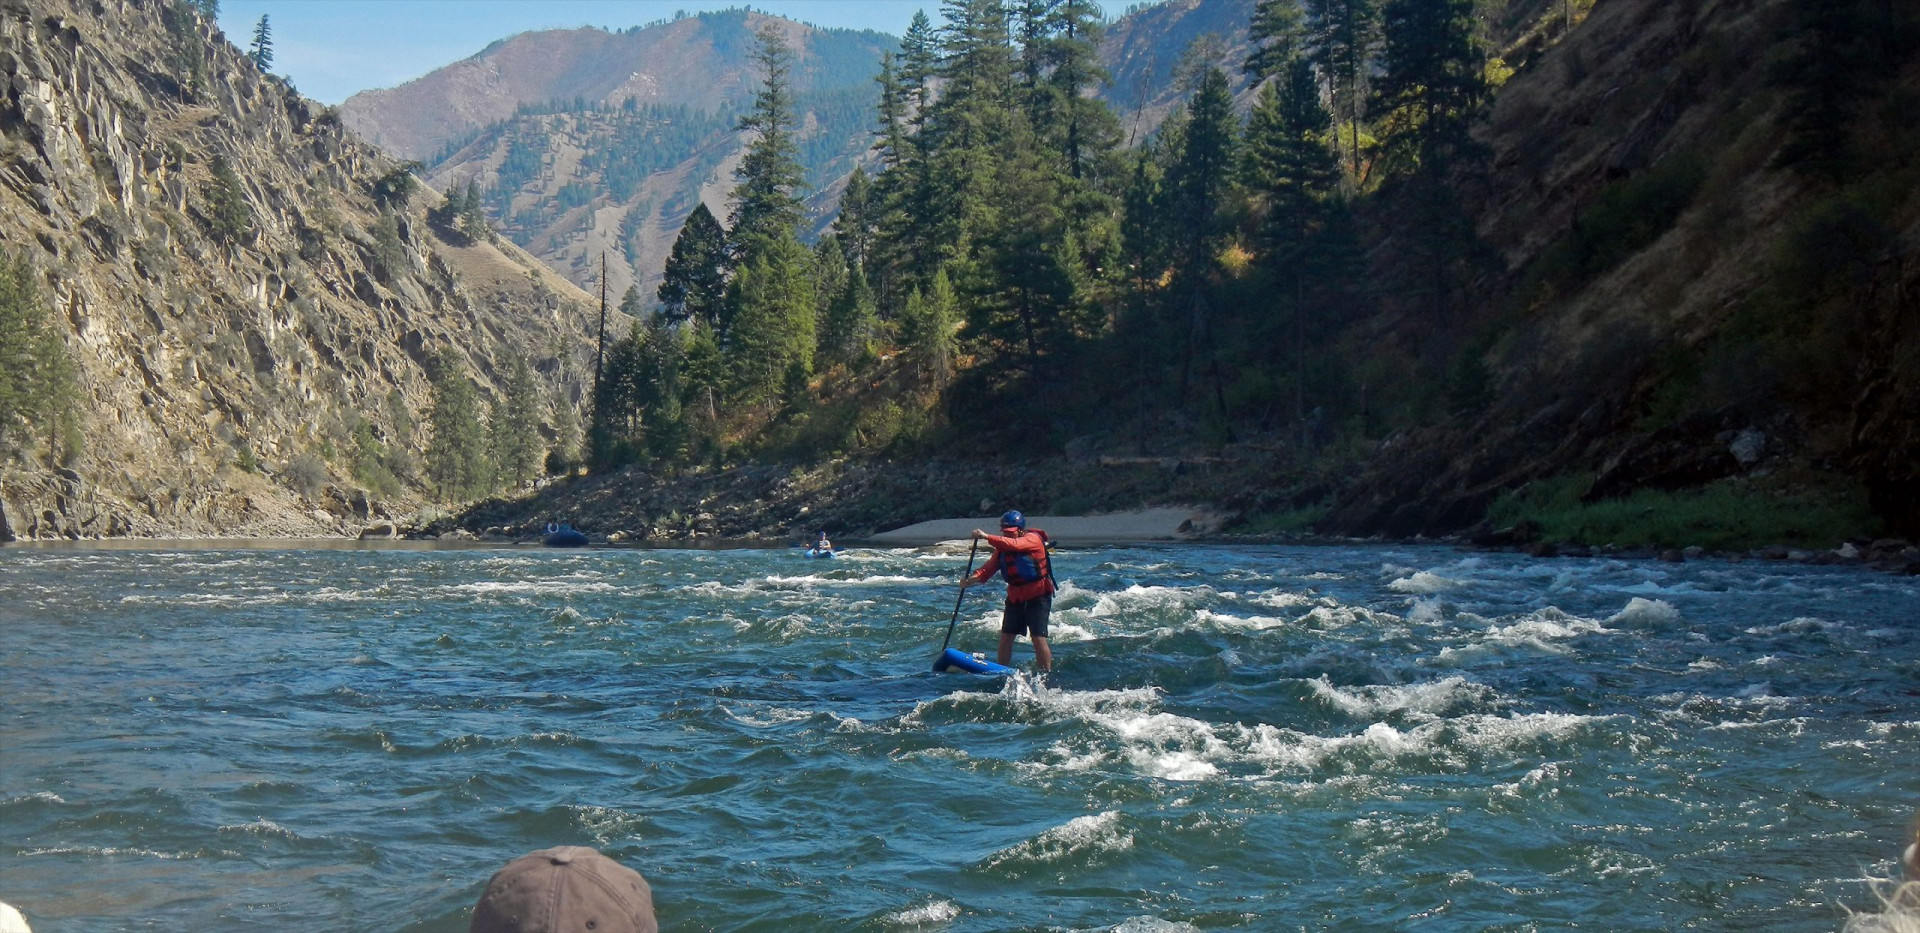 Idaho Salmon High Adventure Options Idaho Salmon Rafting the River of